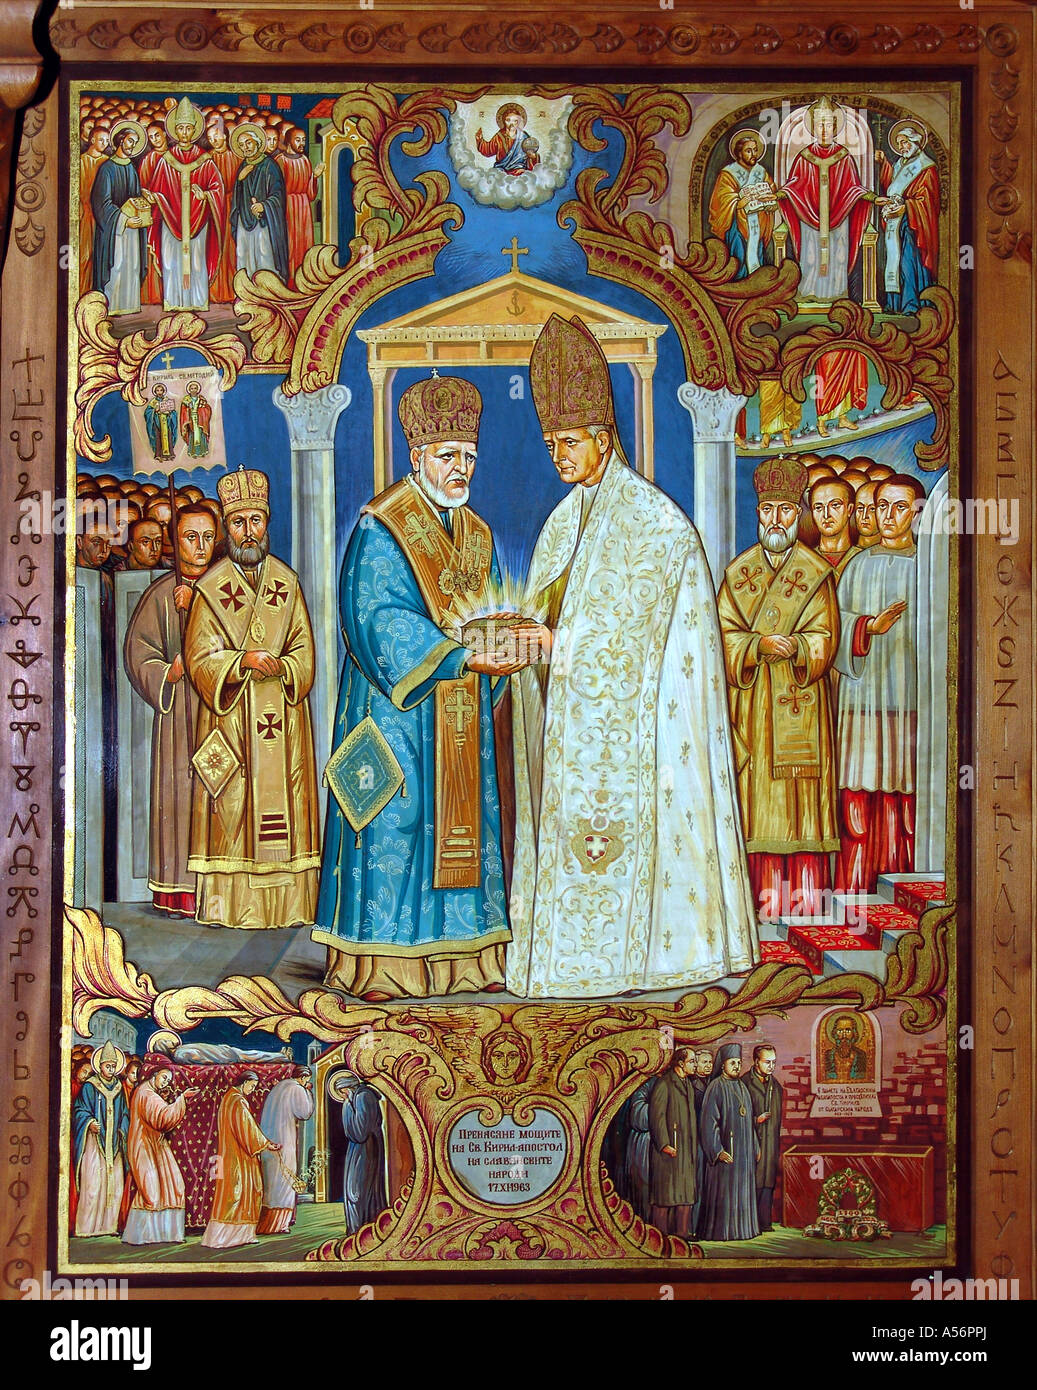 Painet ja0718 Bulgarien byzantinischen katholischen Kirche Plovdiv Ikonen im Inneren Foto 2004 Land Europas Religion Entwicklungsland Stockfoto